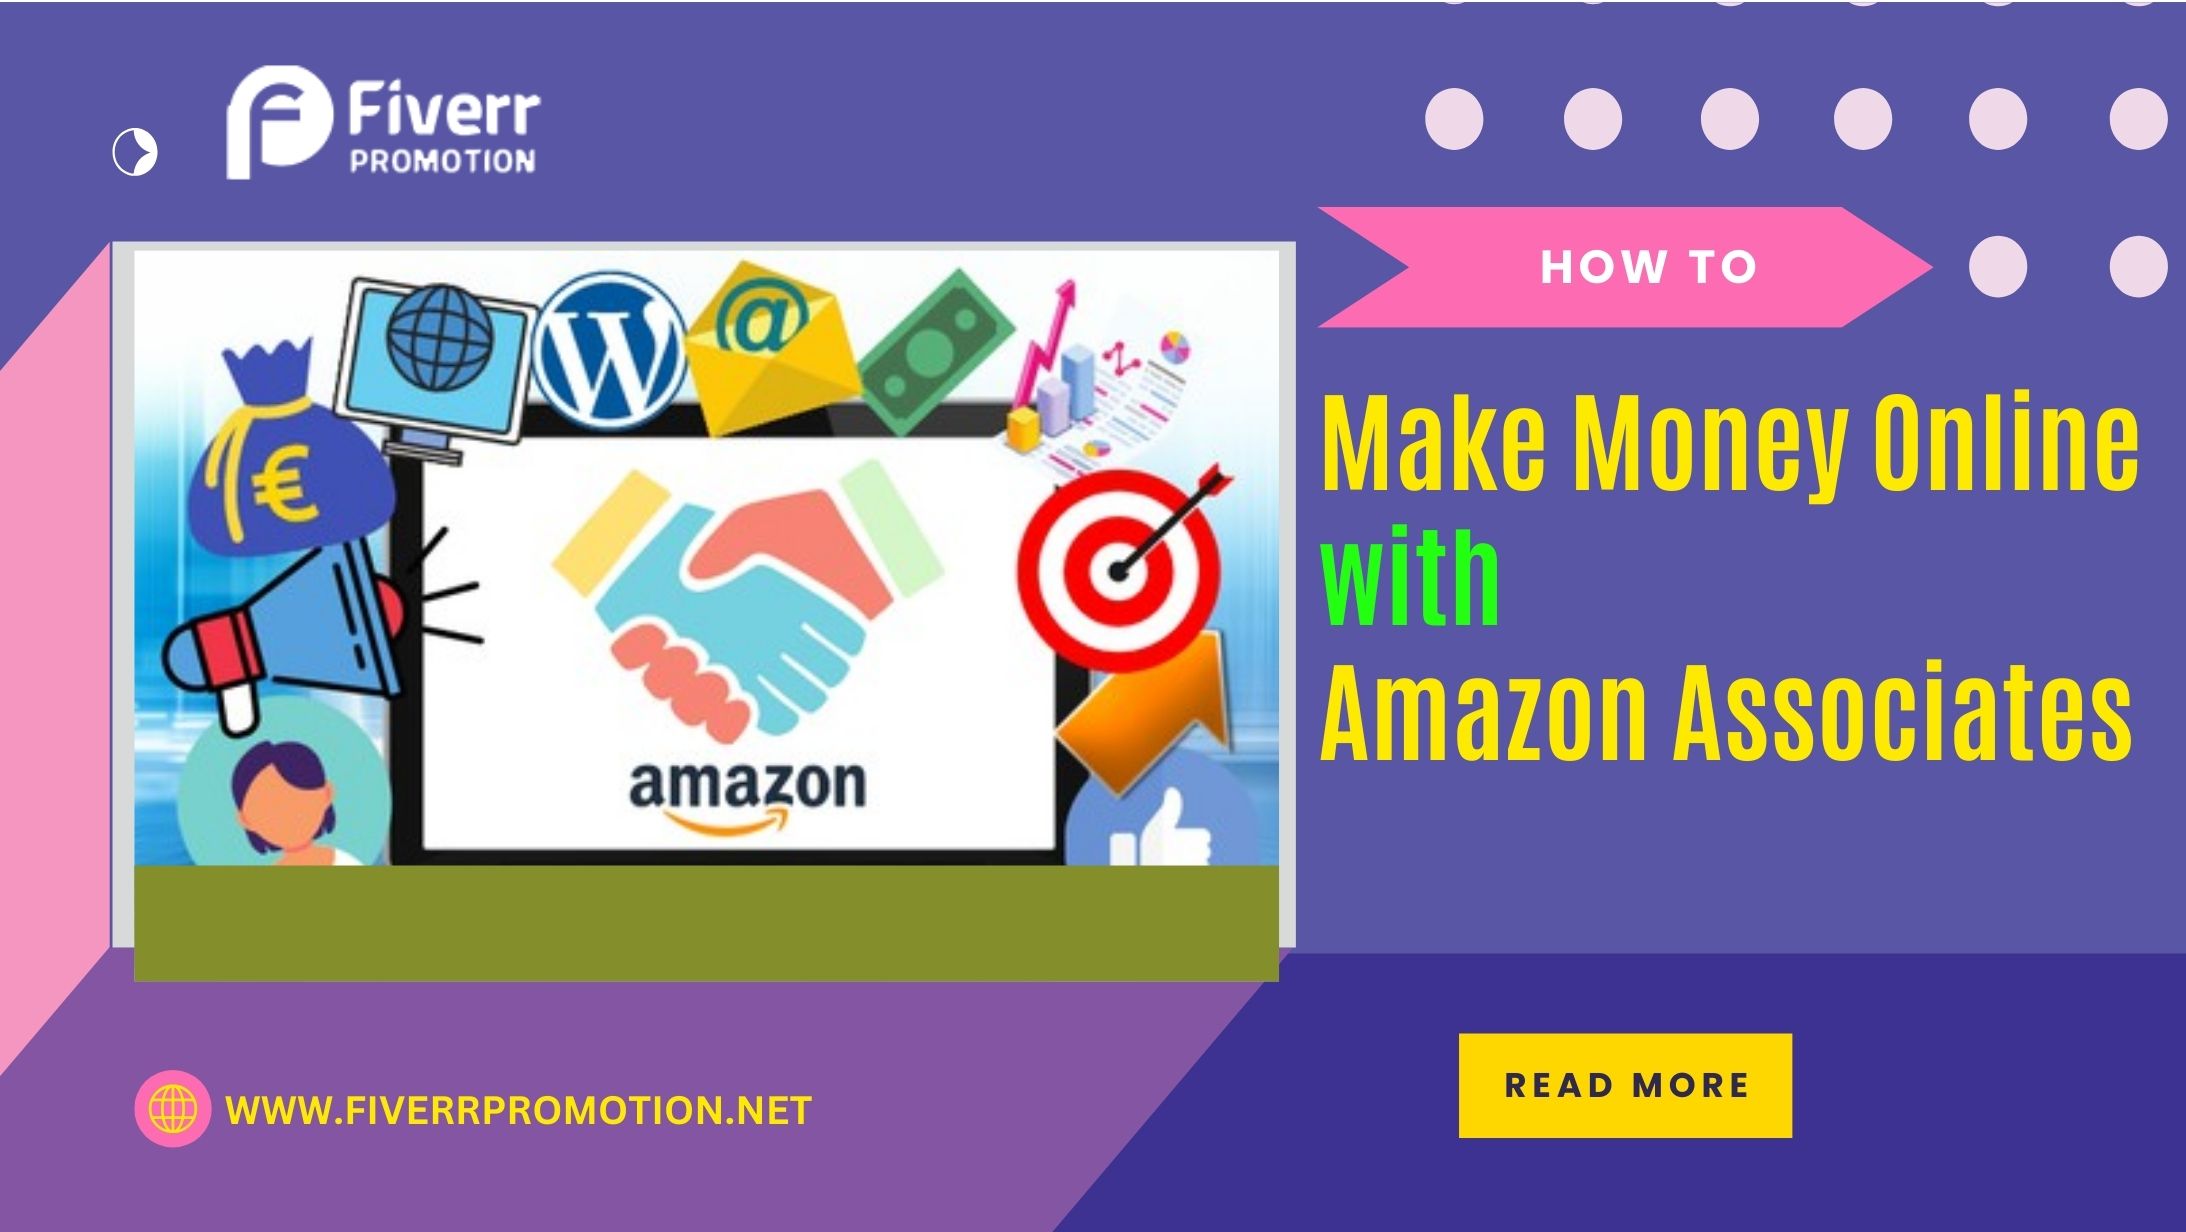 How to Make Money Online with Amazon Associates